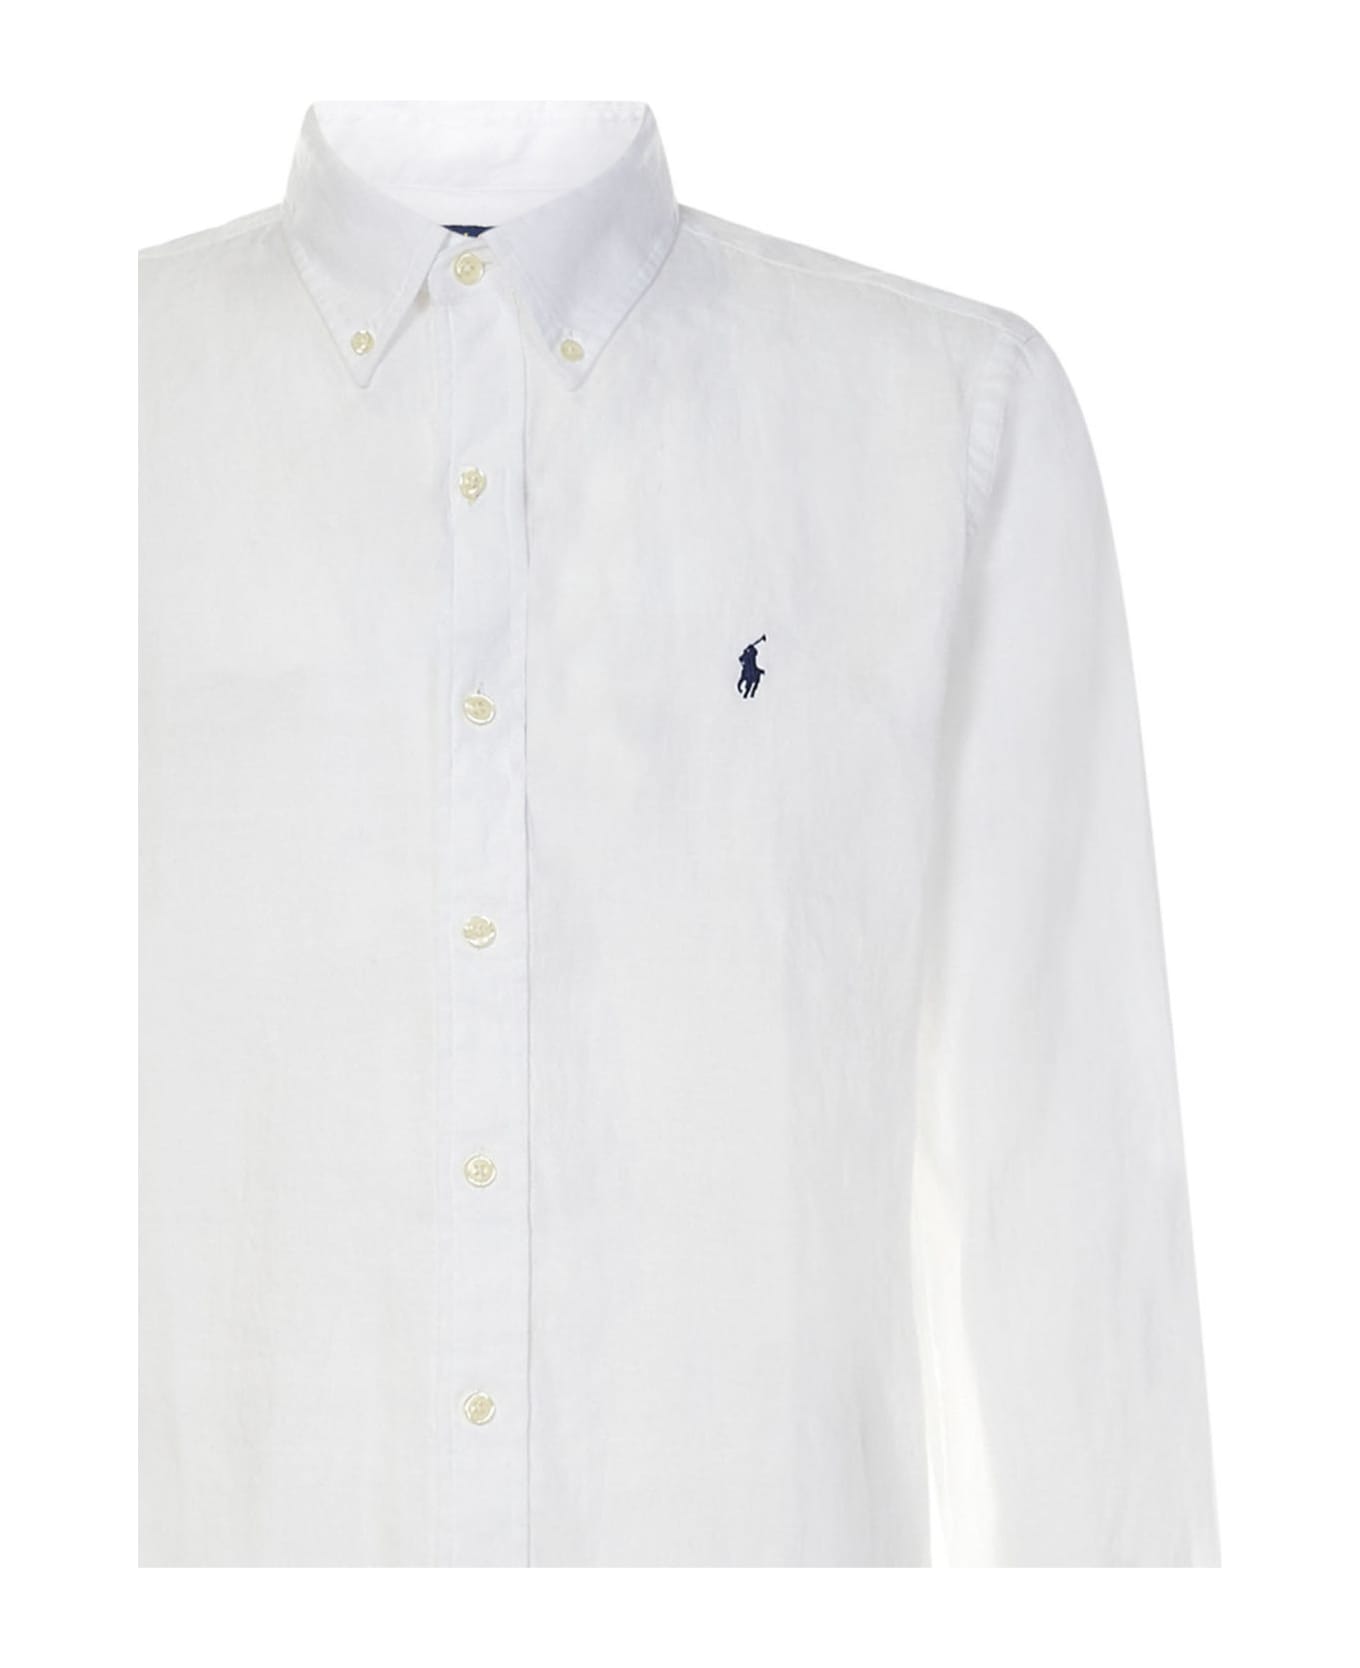 Ralph Lauren Shirt - White